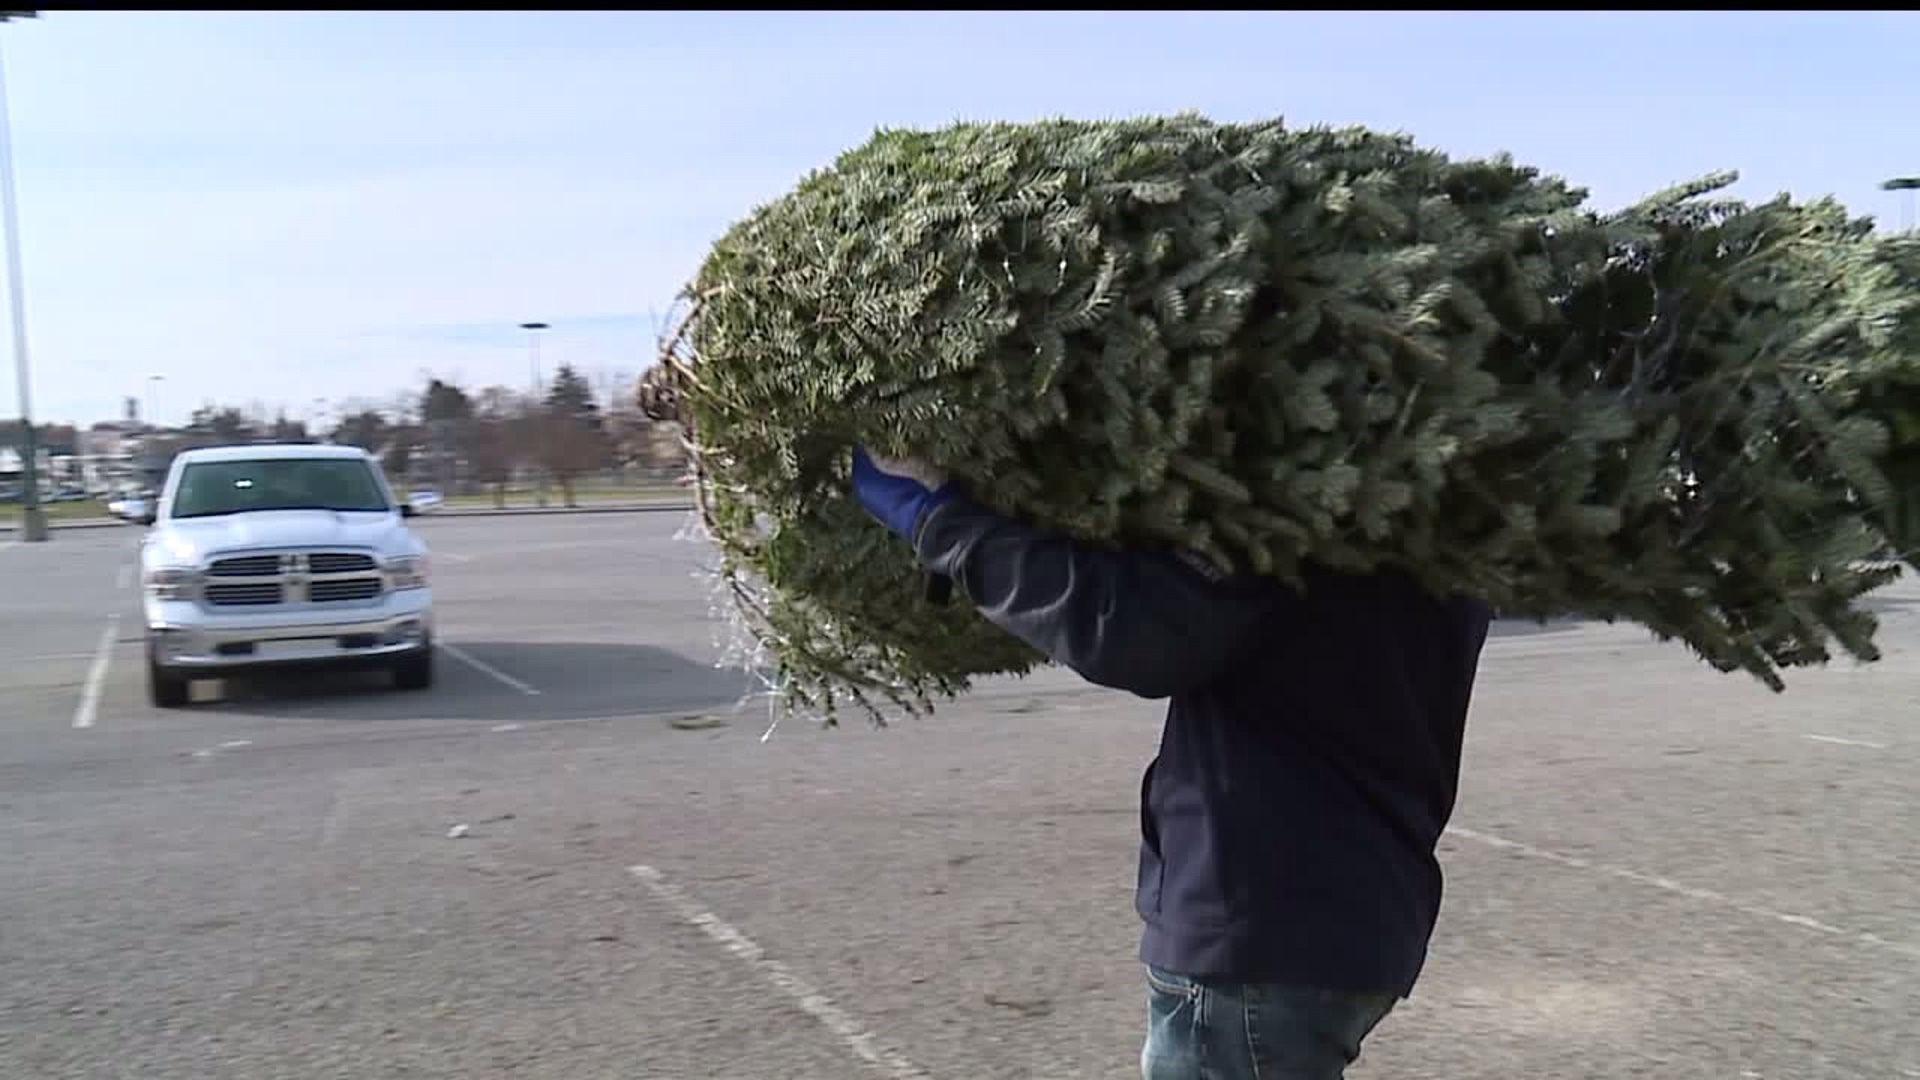 Strathmeyer Christmas Trees hosts Winter Wonderland and Pop-Up Market